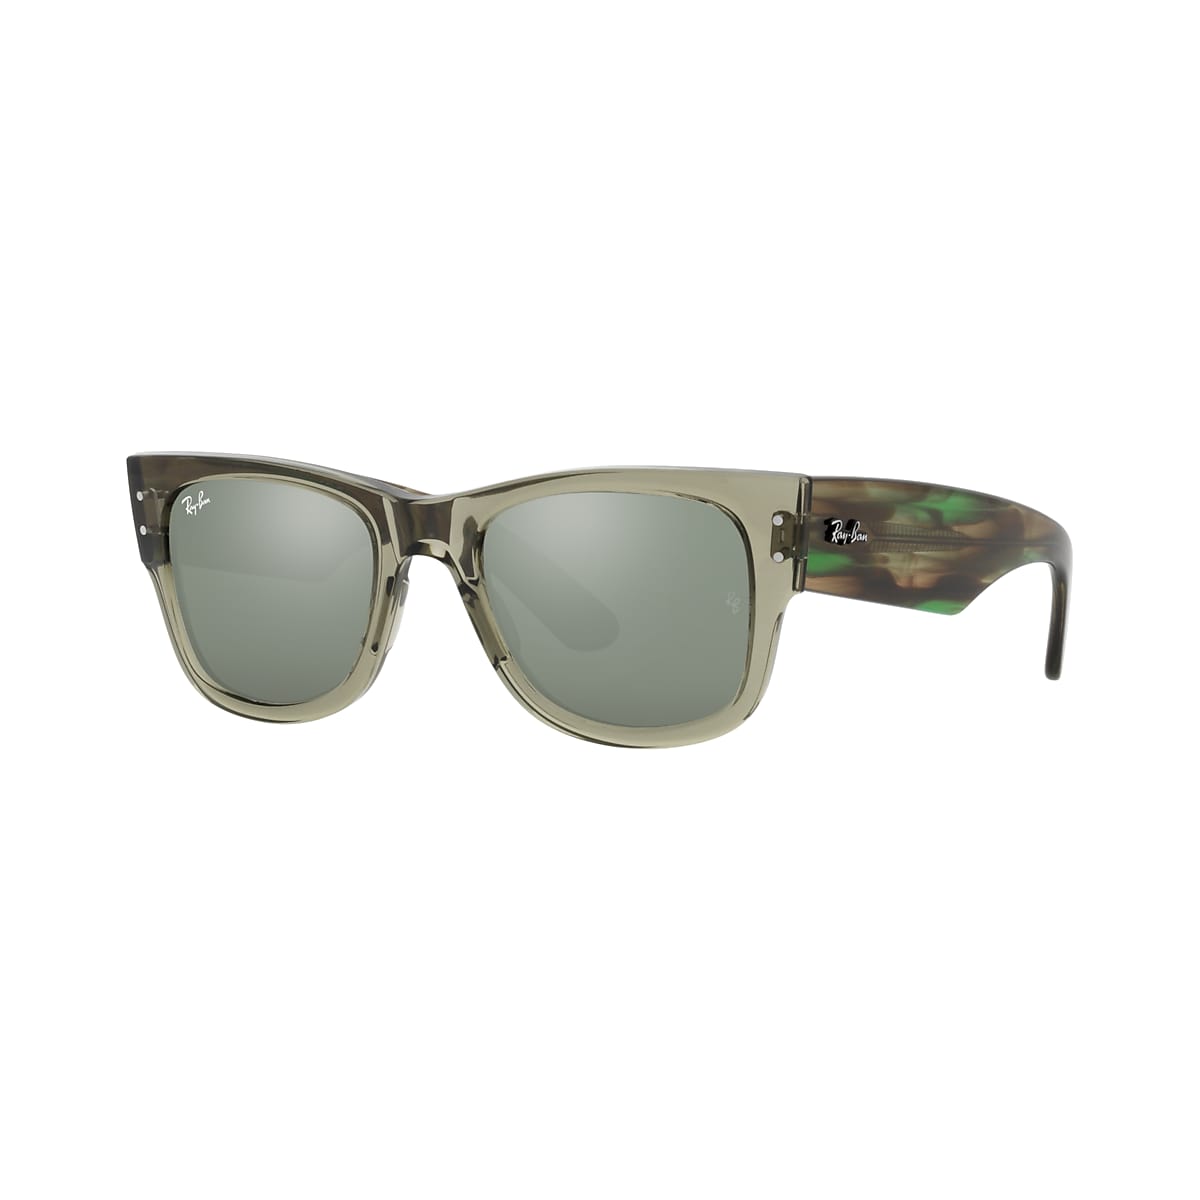 Hut | & Wayfarer Sunglasses Transparent Silver Green USA Mega 51 RB0840S Sunglass Ray-Ban